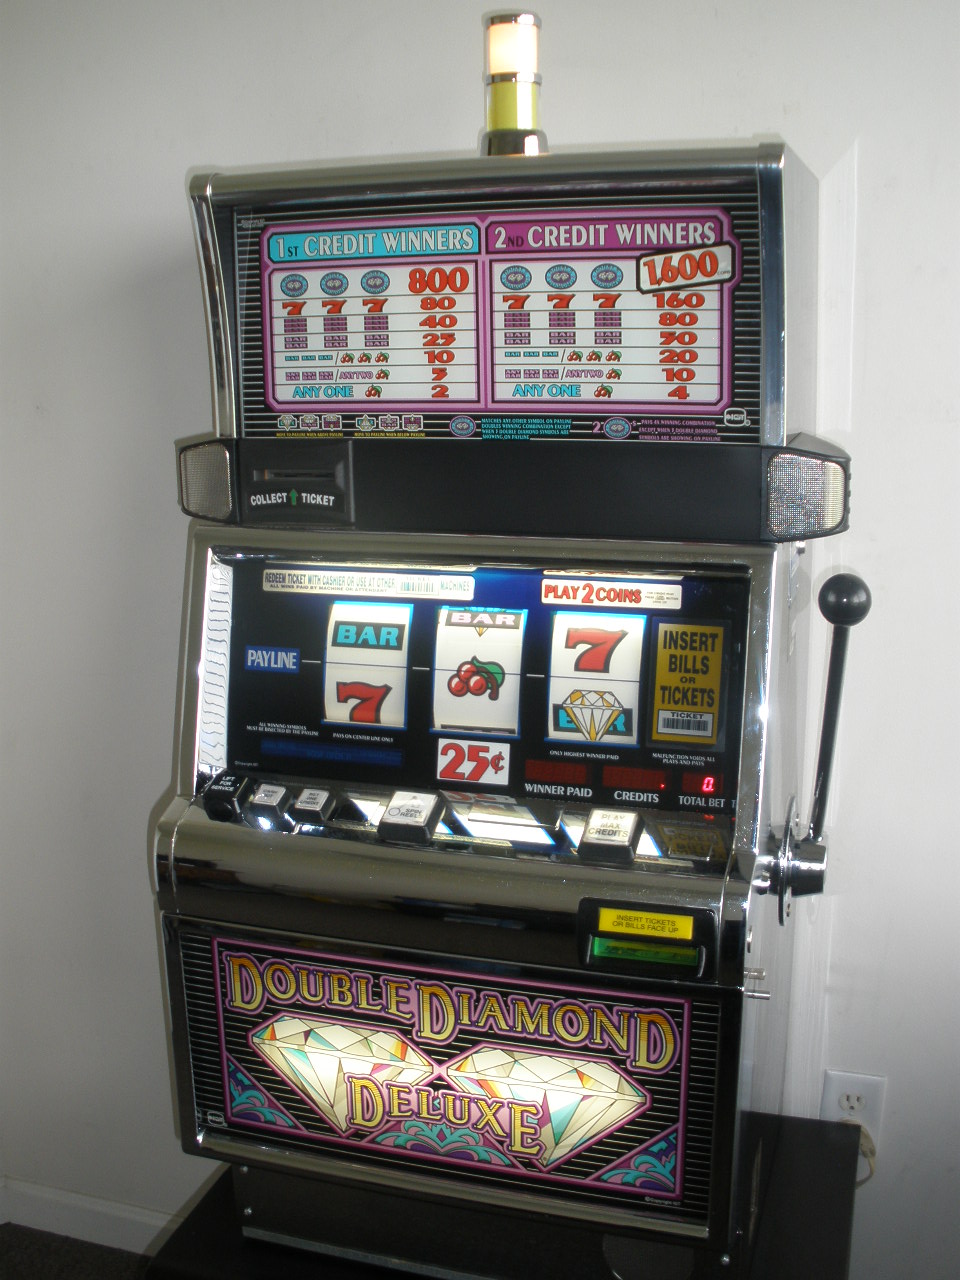 resetting a igt slot machine